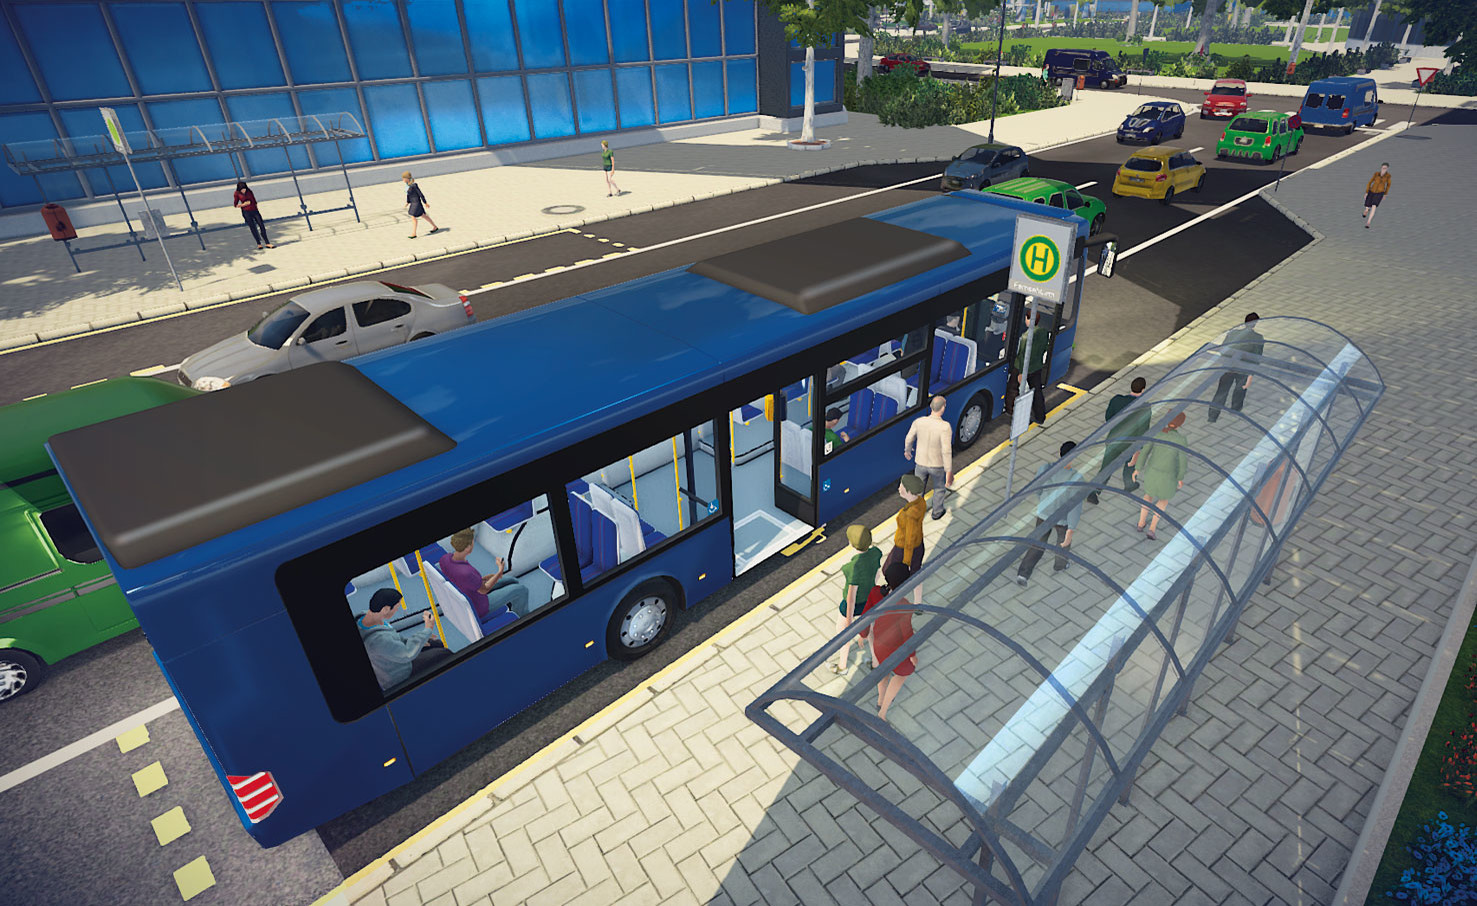 city bus simulator 2016